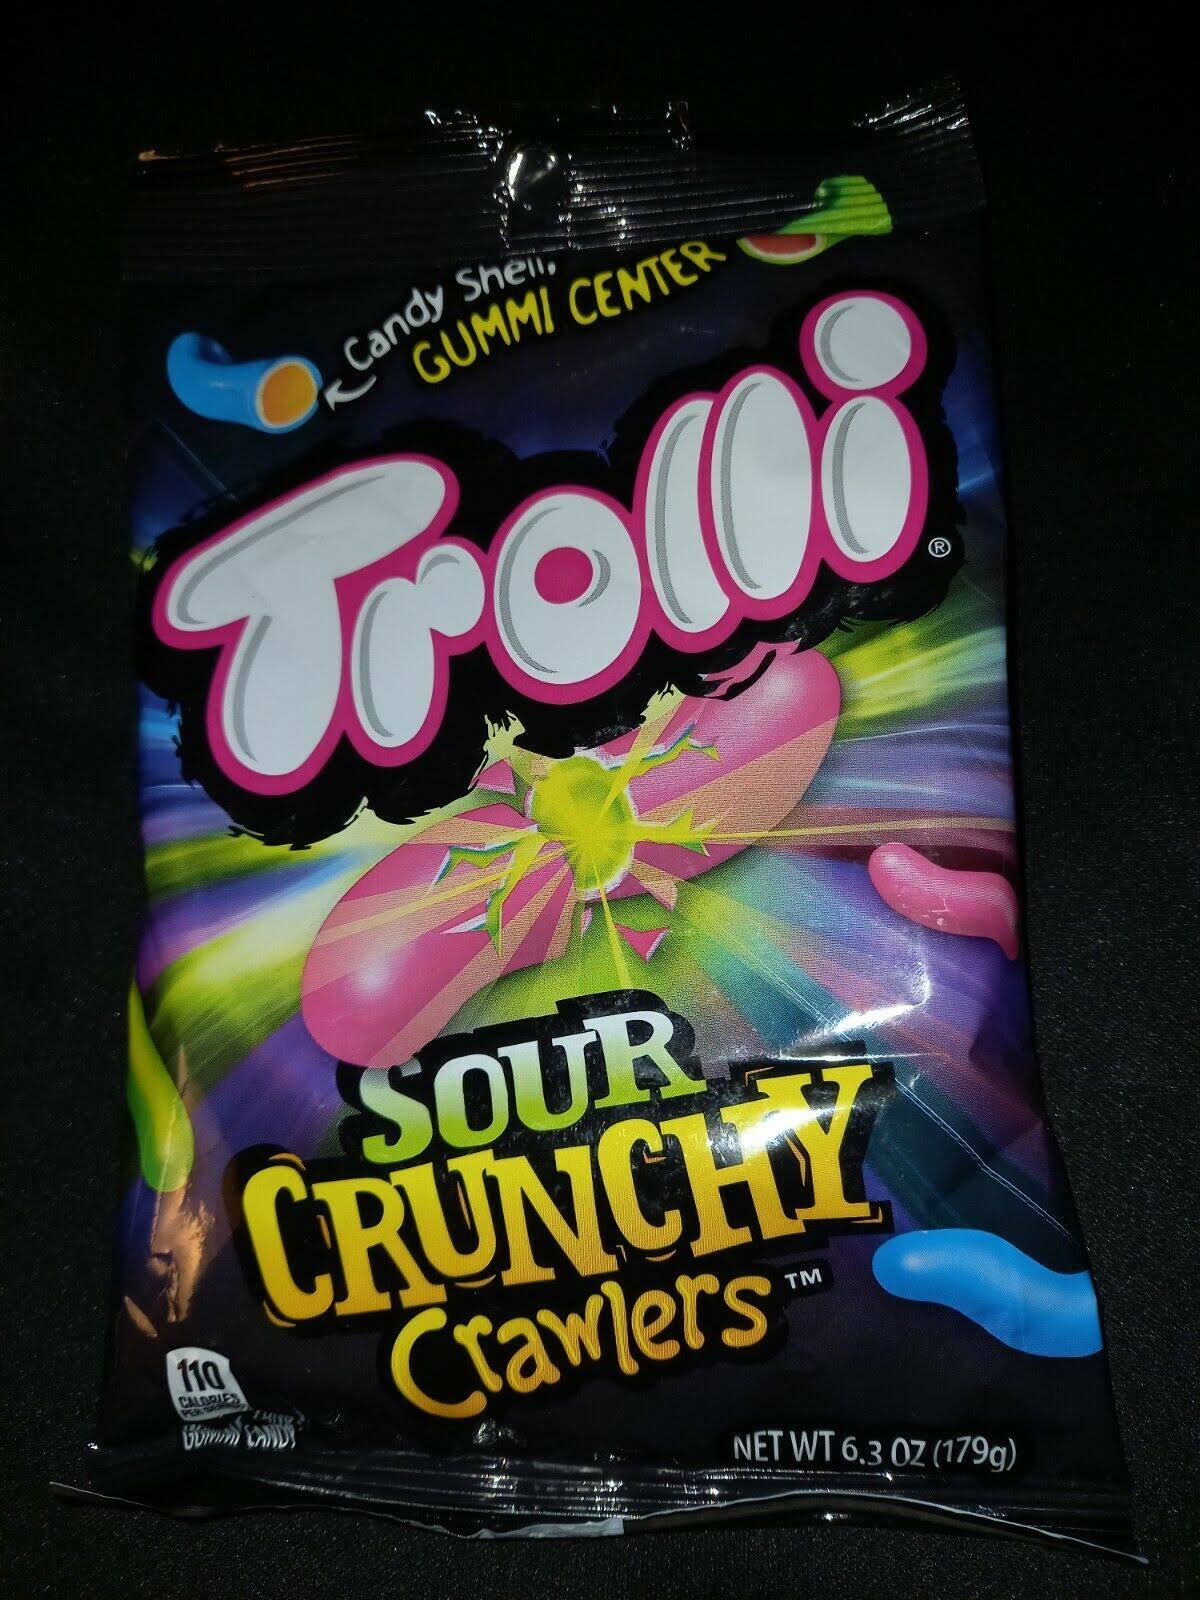 179g Trolli Sour Crunchy Crawlers Fruit Gummi Worms American Candy Sweets